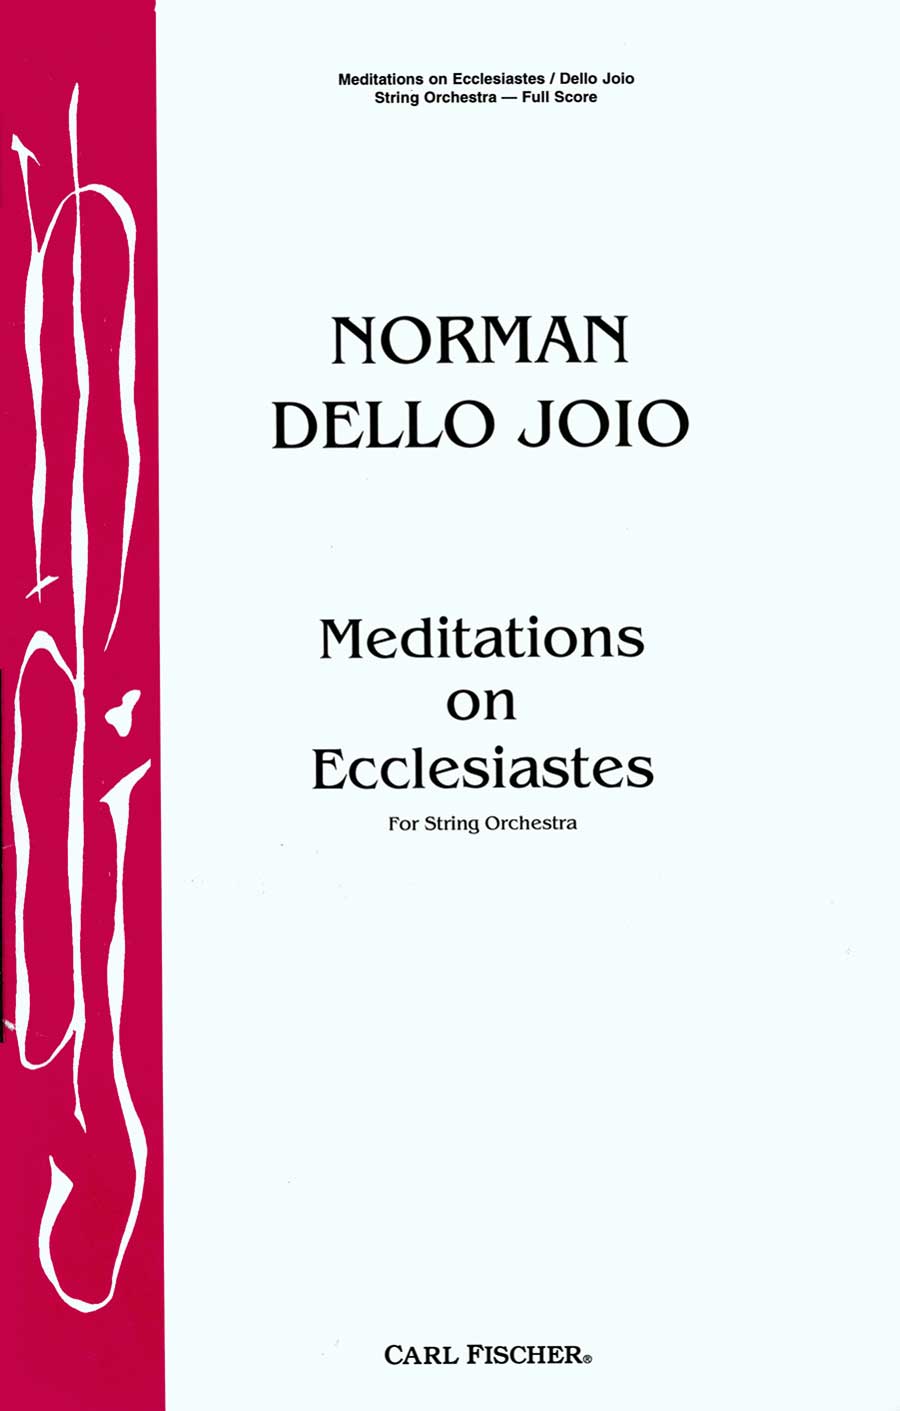 Dello Joio: Meditations on Ecclesiastes